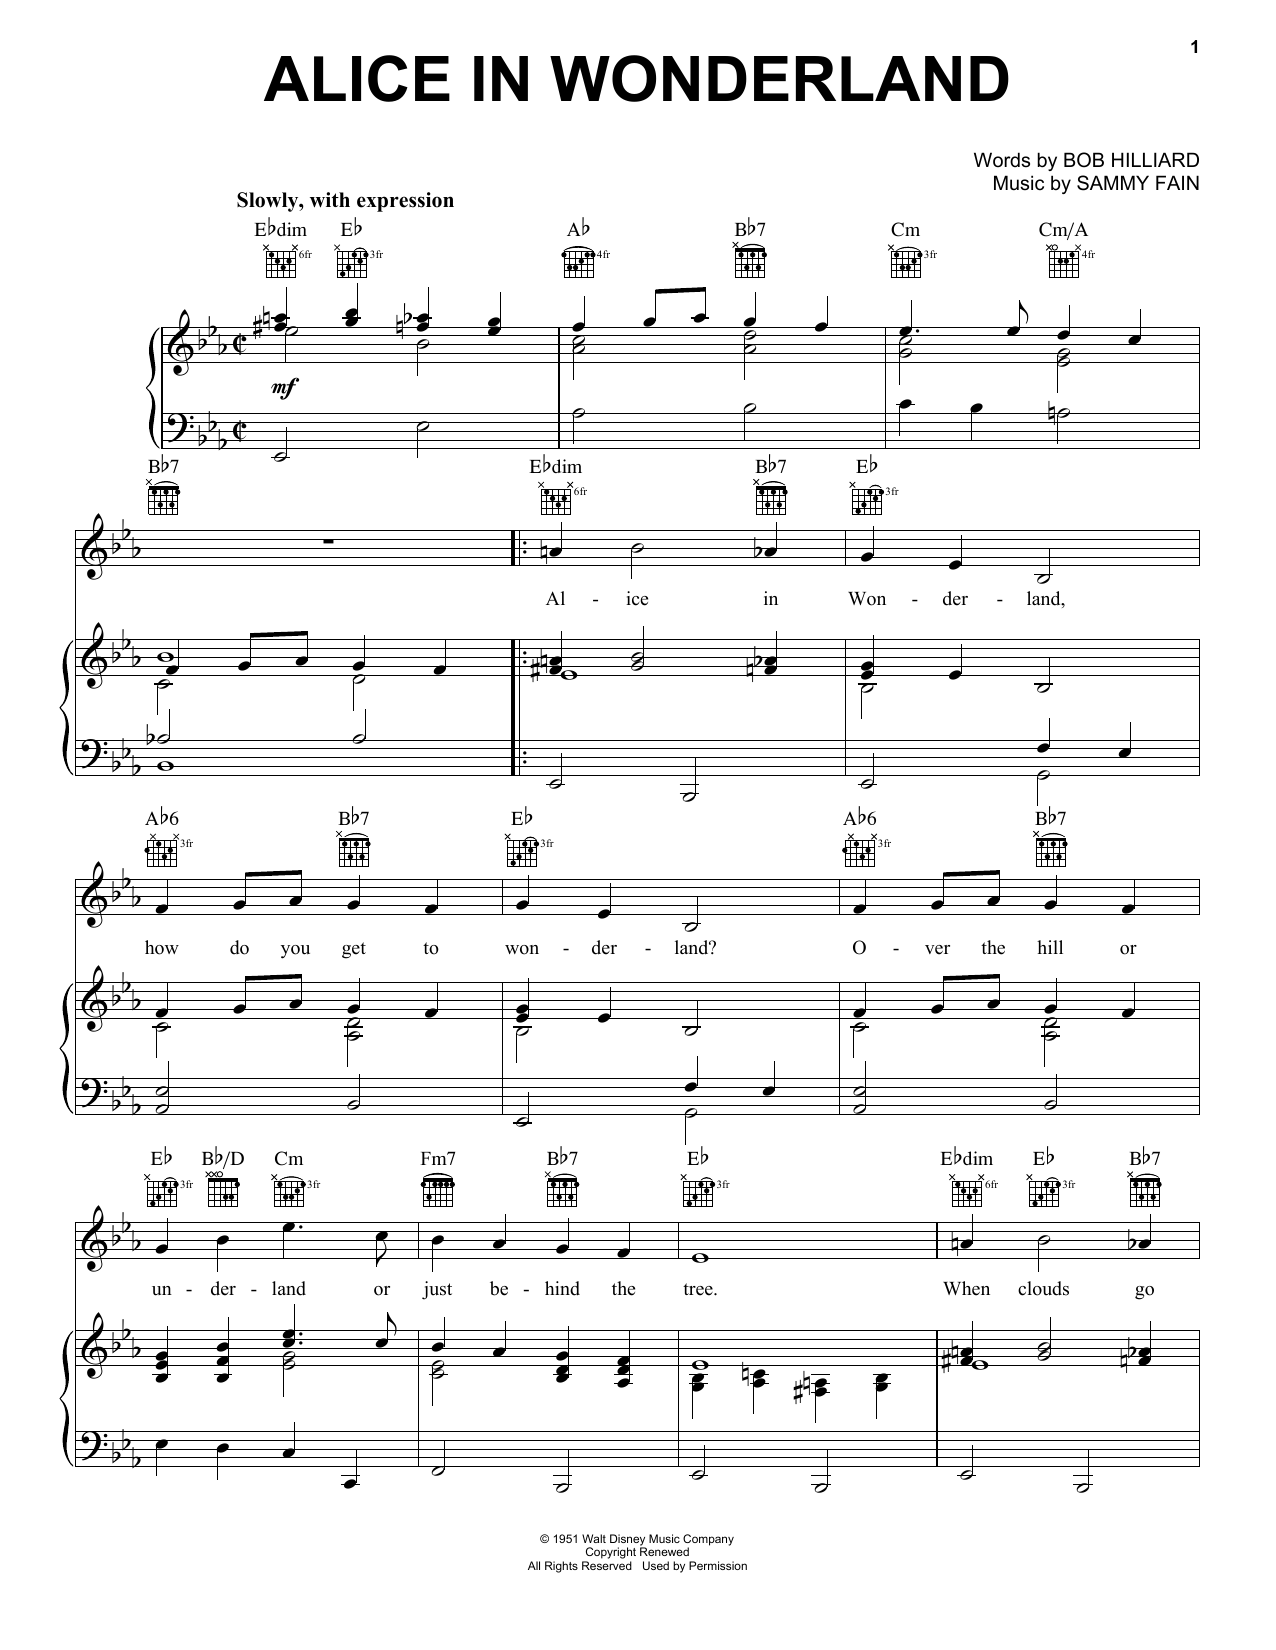 Bill Evans Alice In Wonderland Sheet Music Notes & Chords for Guitar Tab - Download or Print PDF